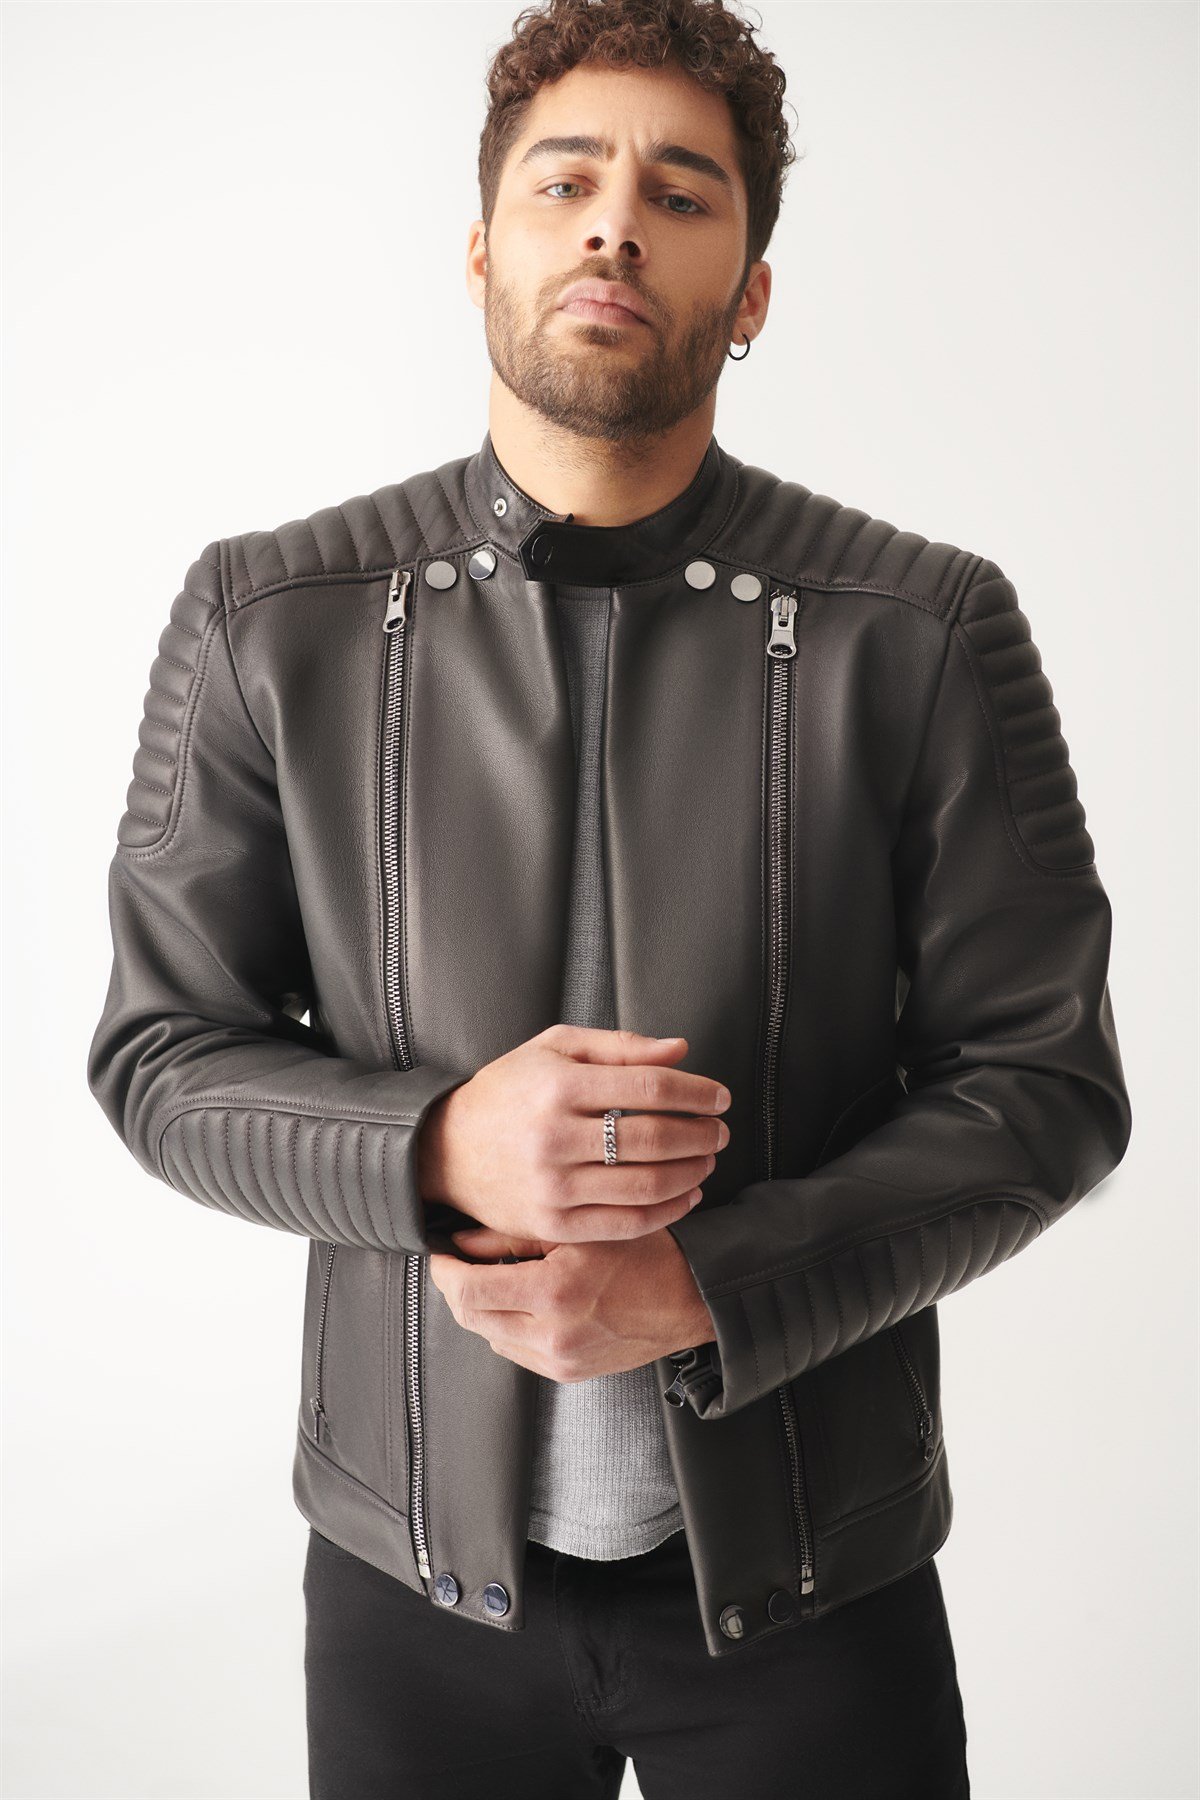 SOSA Gray Blackout Biker Leather Jacket | Men's Leather Jacket Models